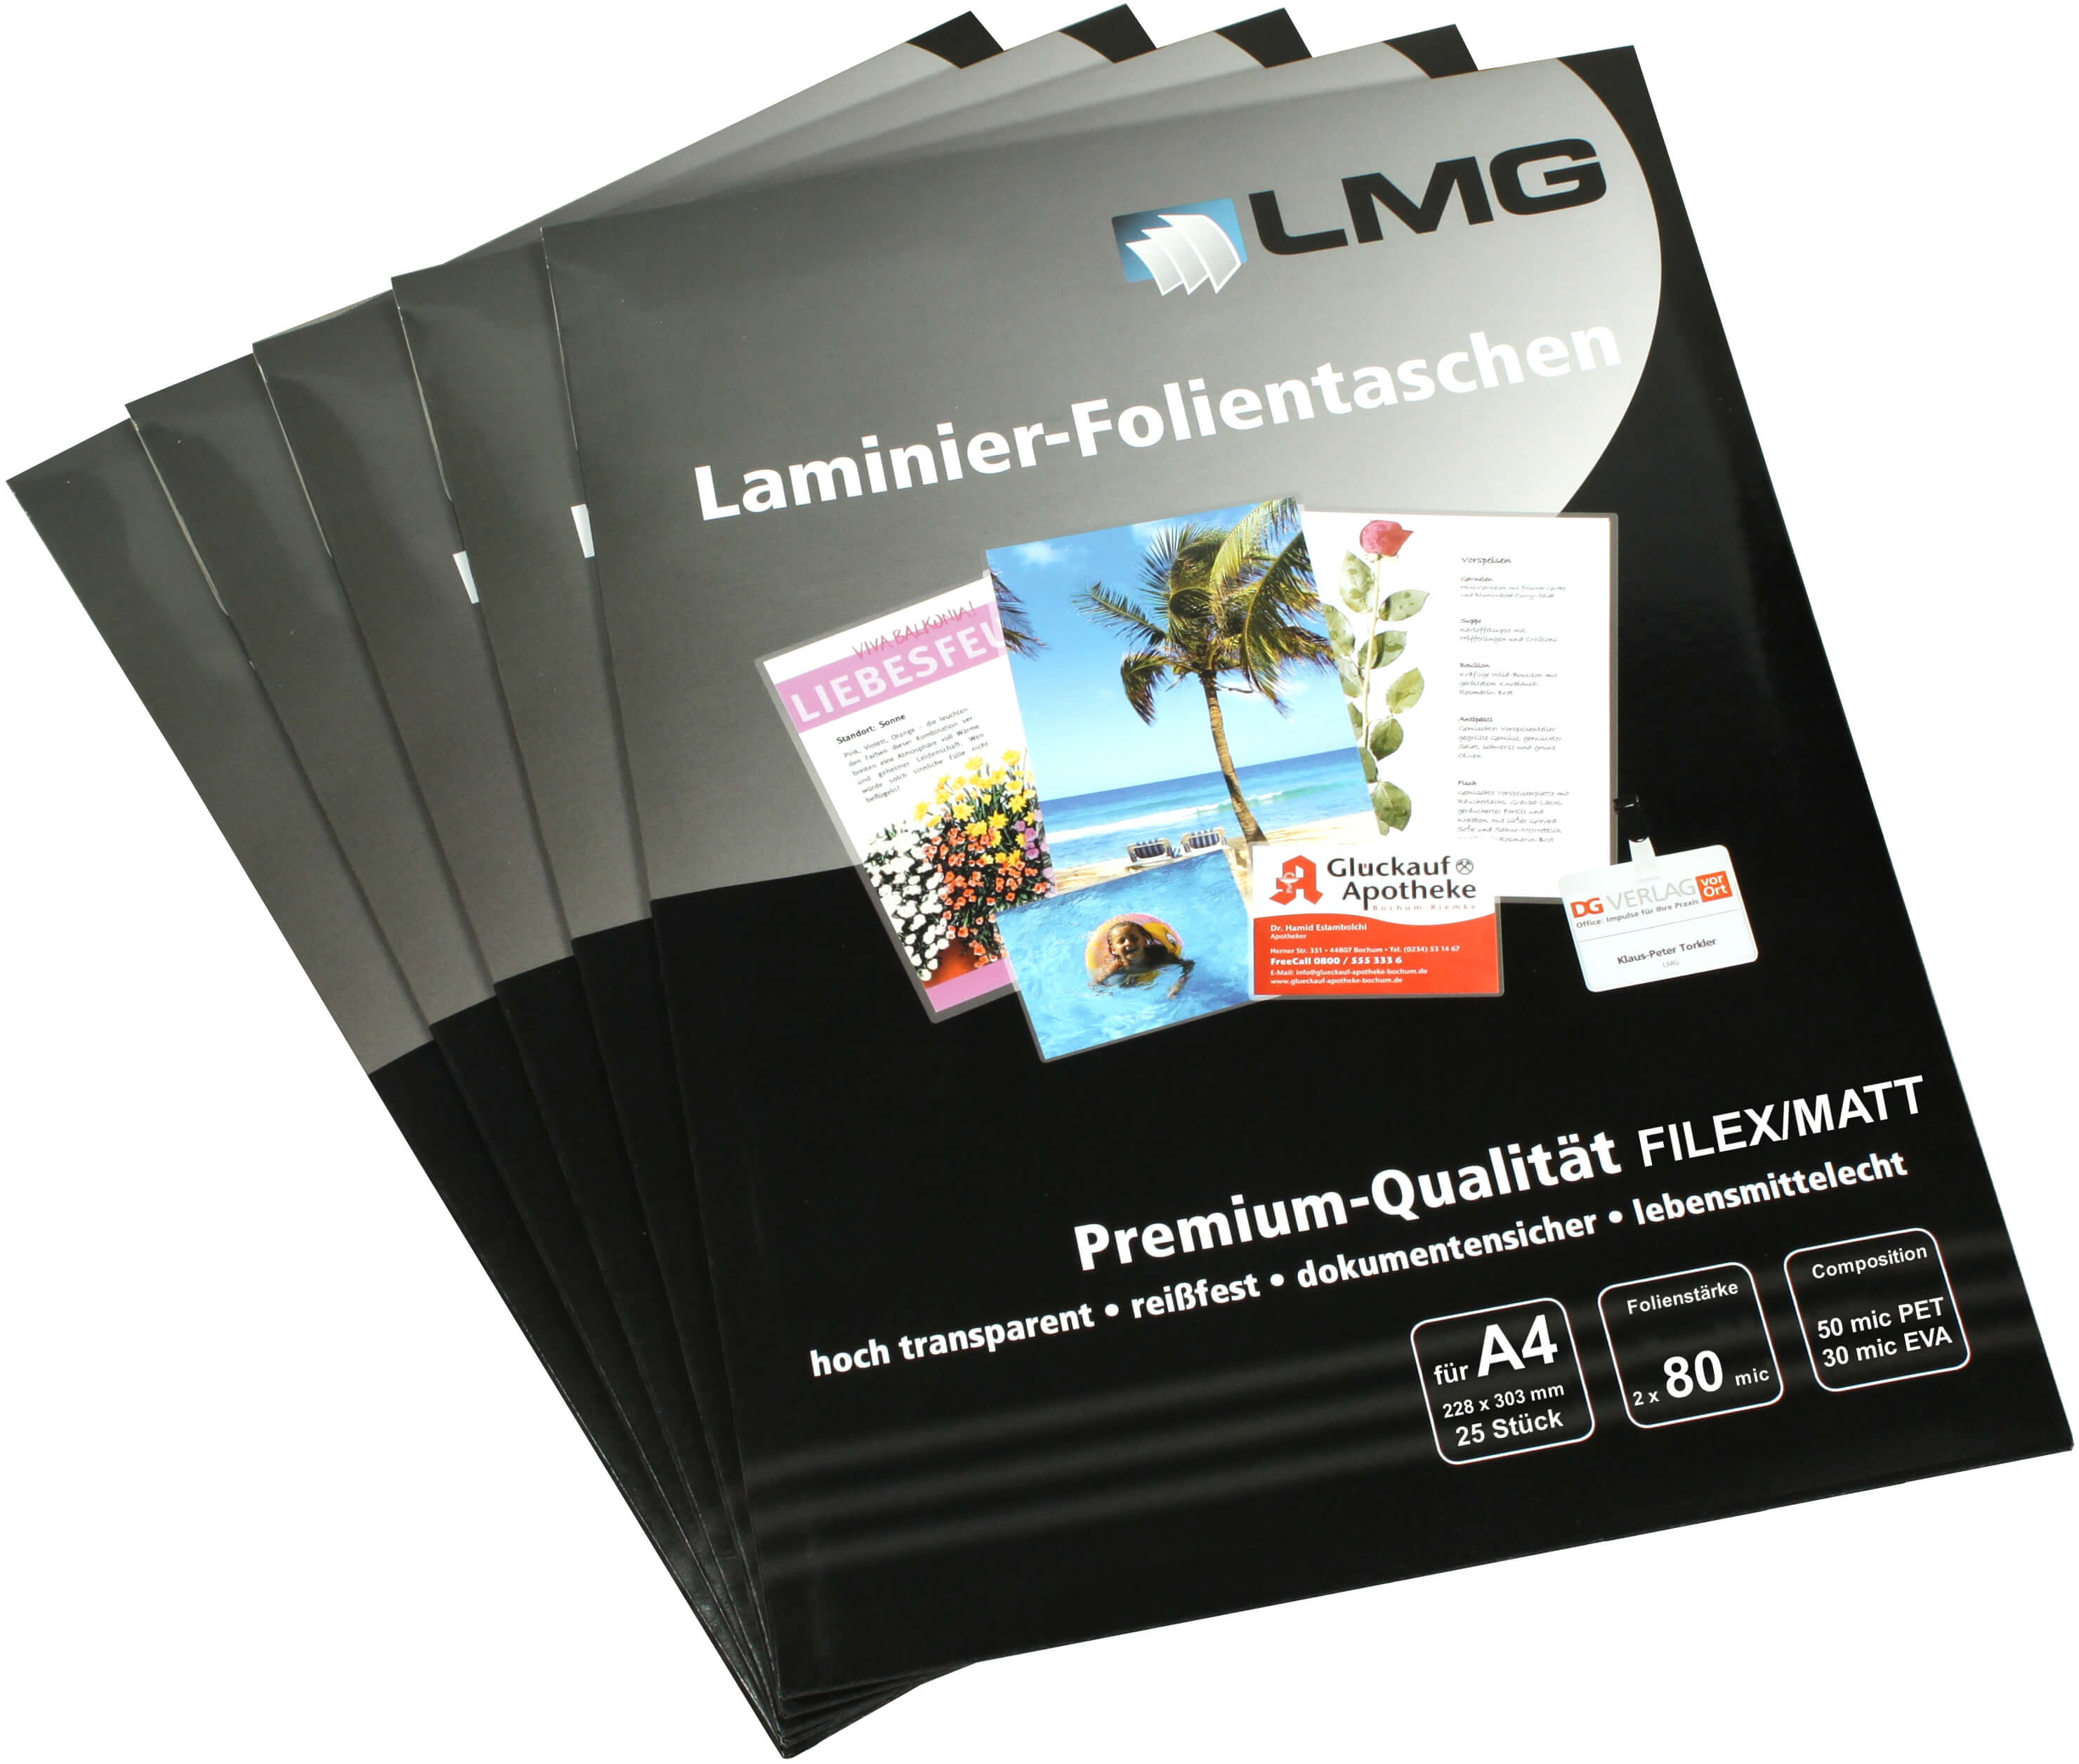 Laminierfolien A4 (228 x 303 mm), 2 x 80 mic zum Abheften | Bestnr. LMGA4-80LM-25